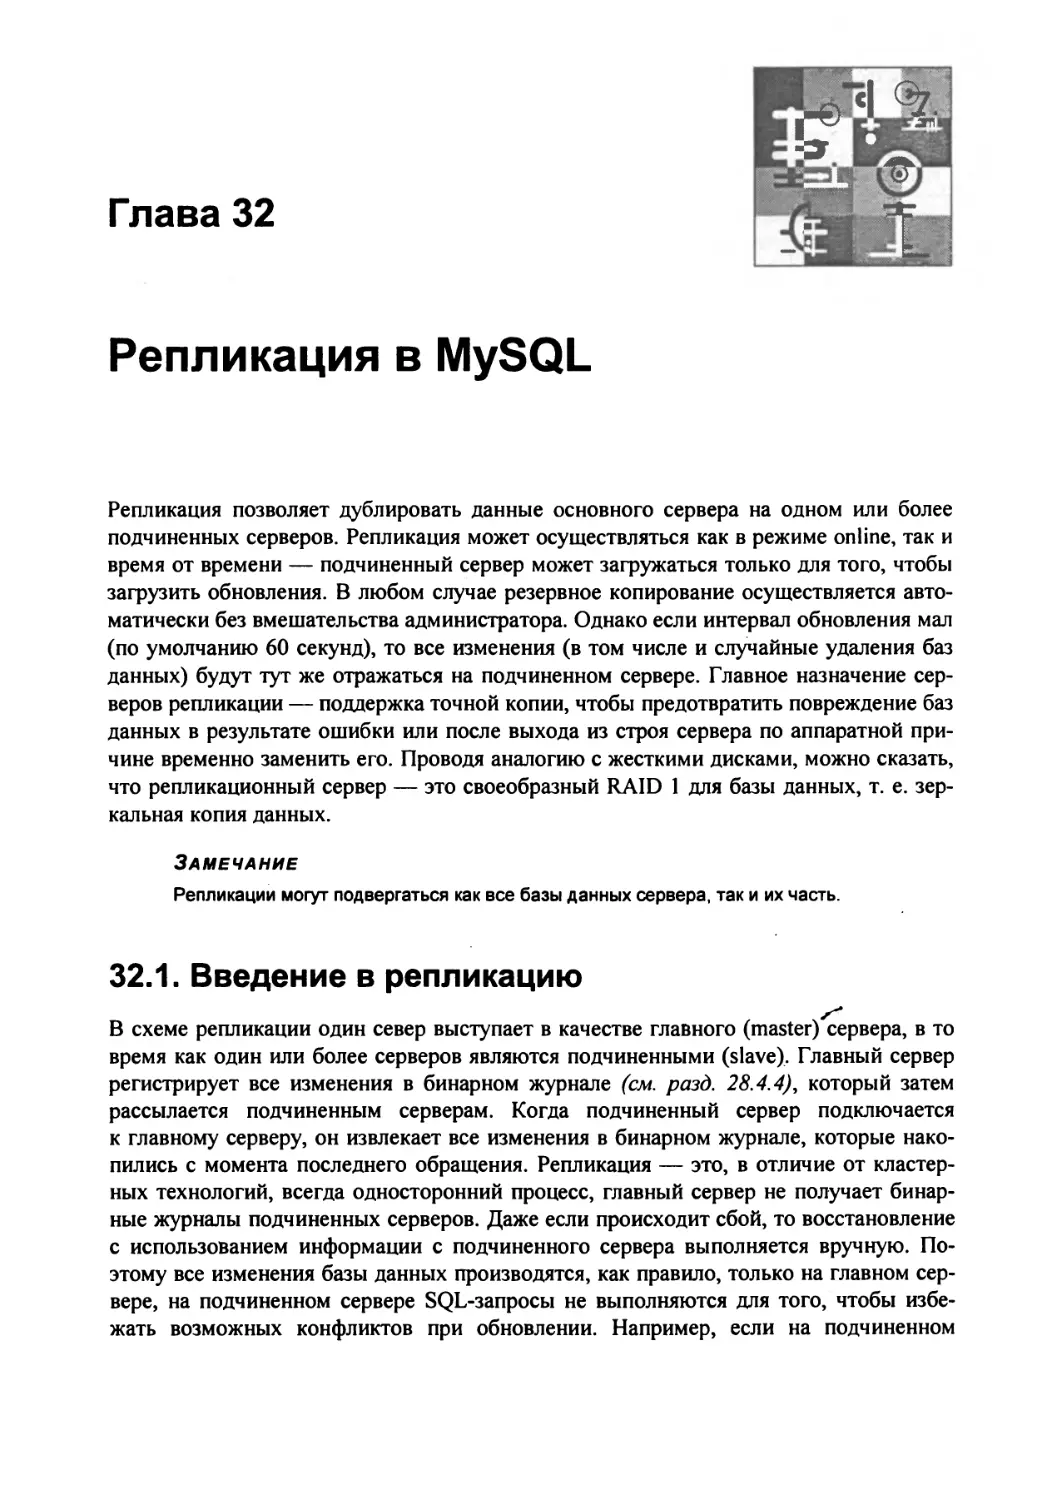 Глава 32. Репликация в MySQL